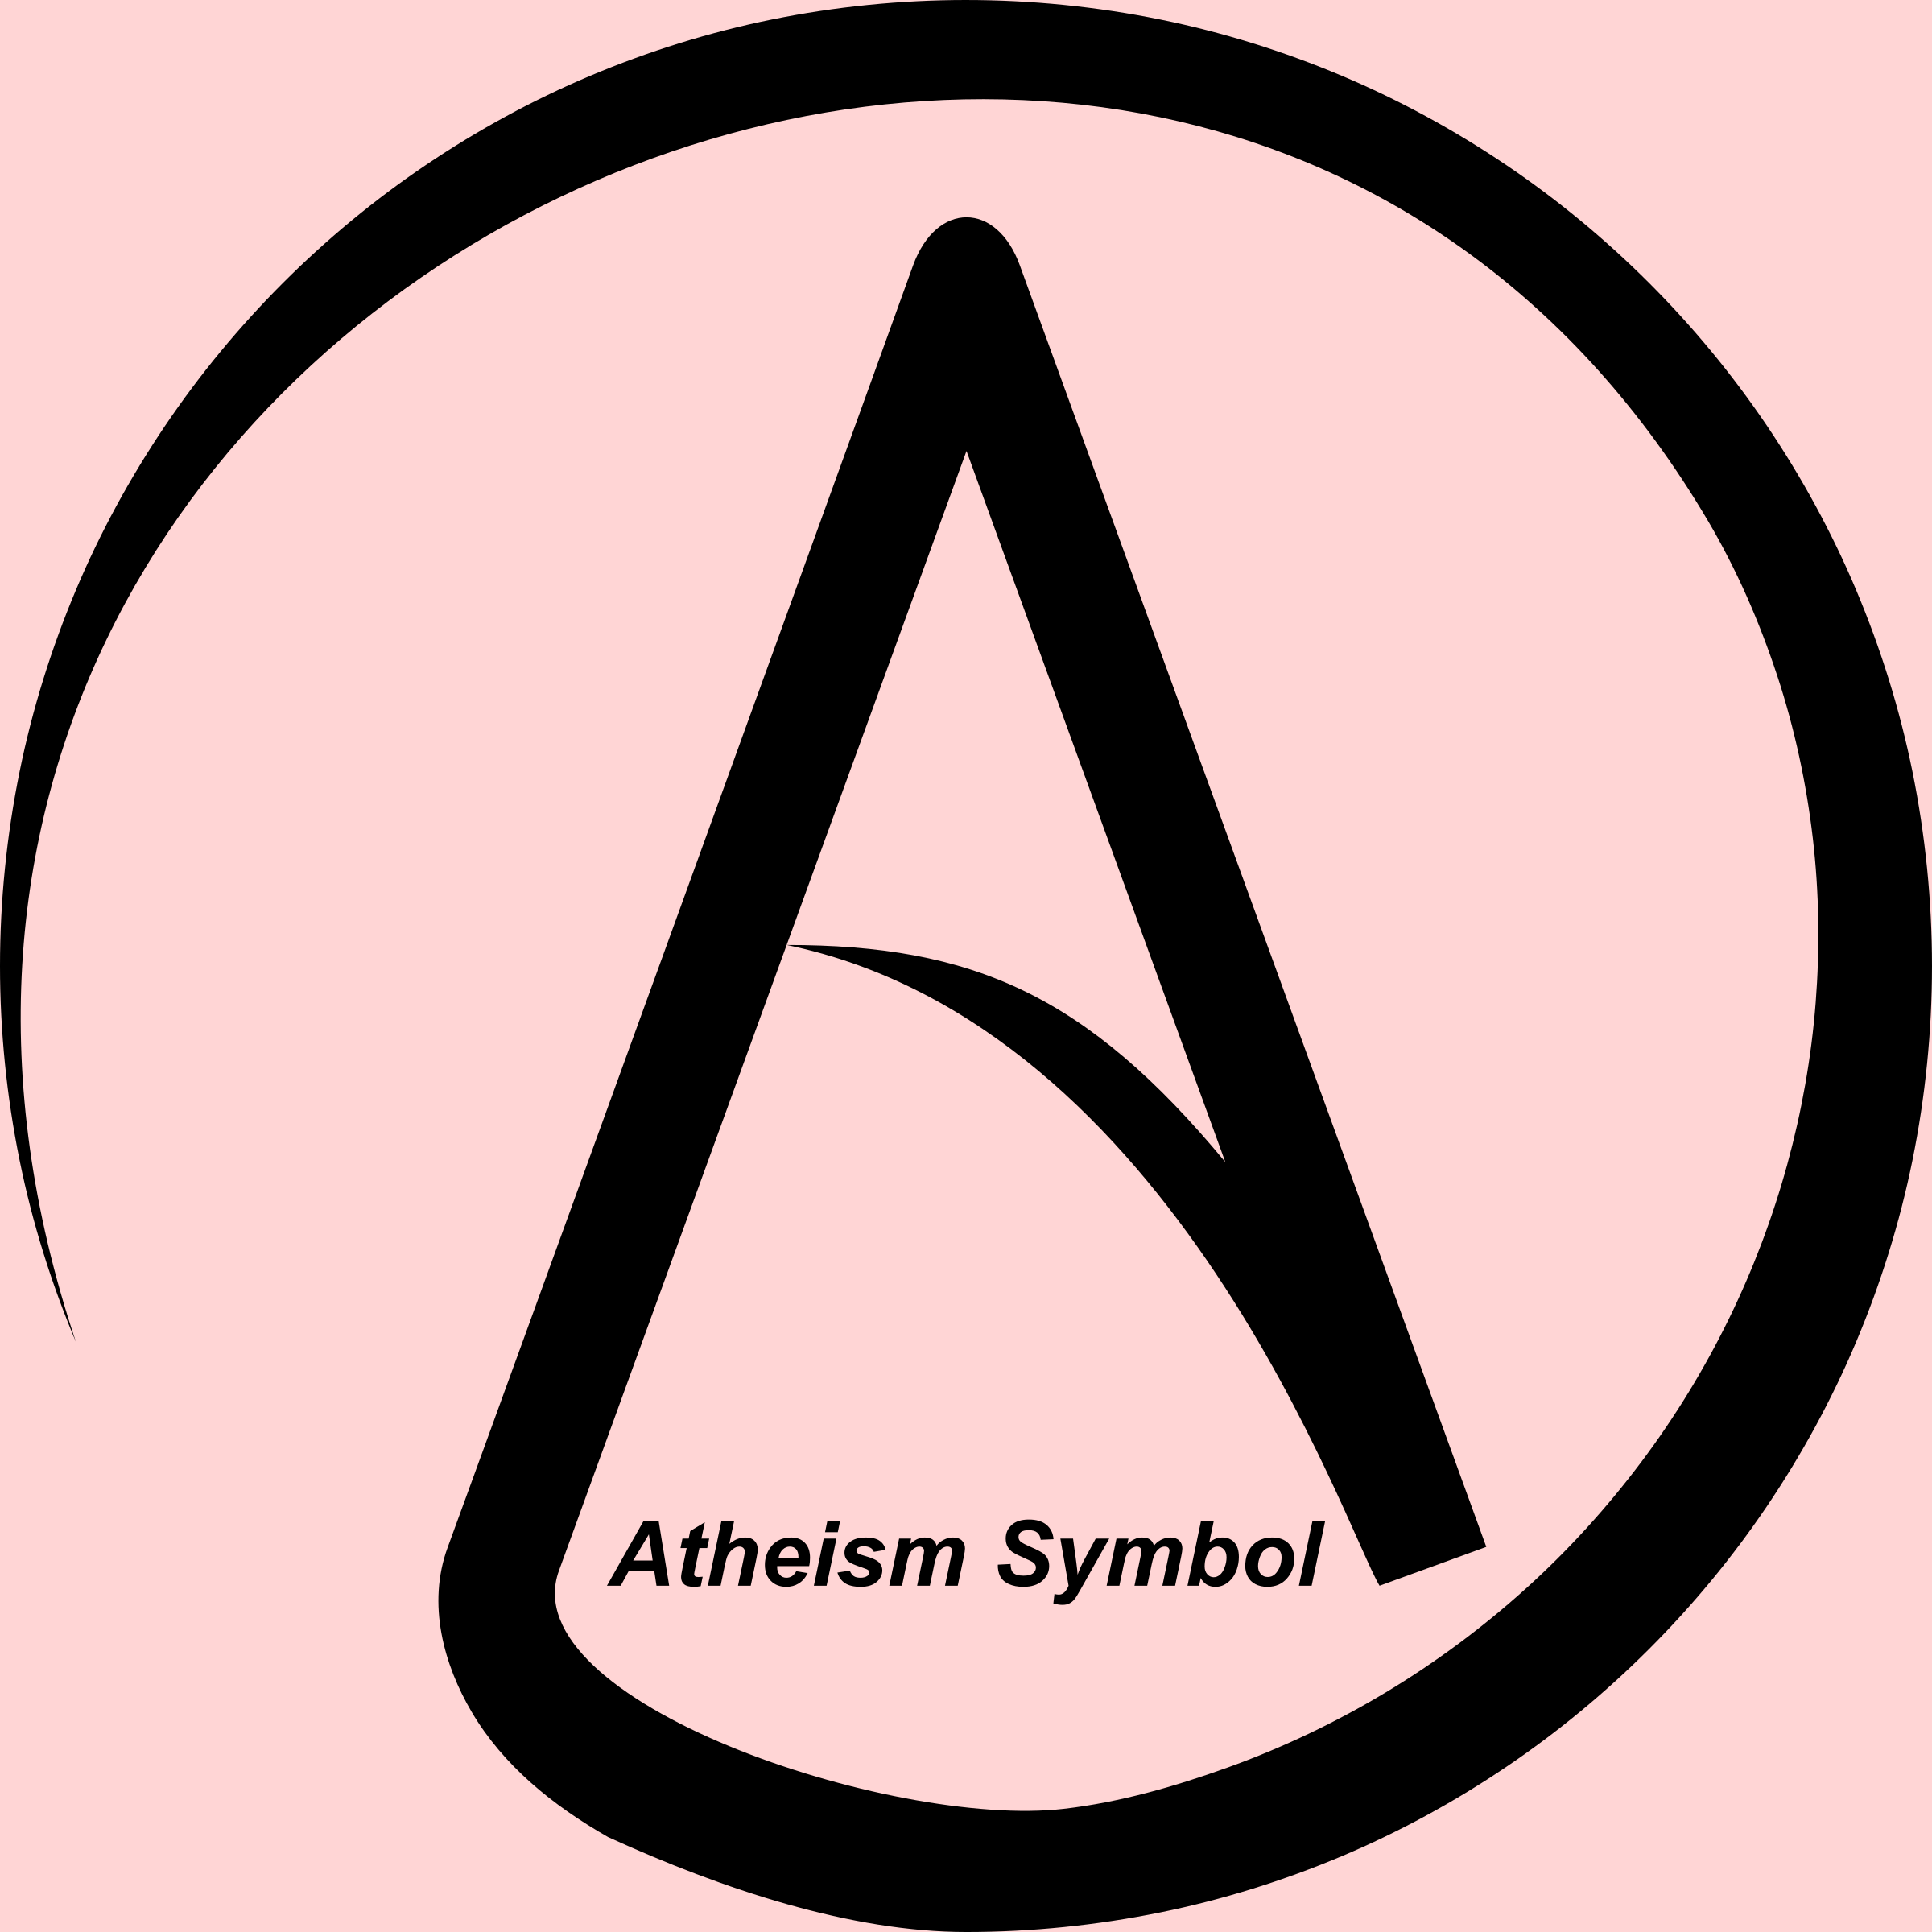 Atheism Symbol (A in Circle) SVG Clip arts